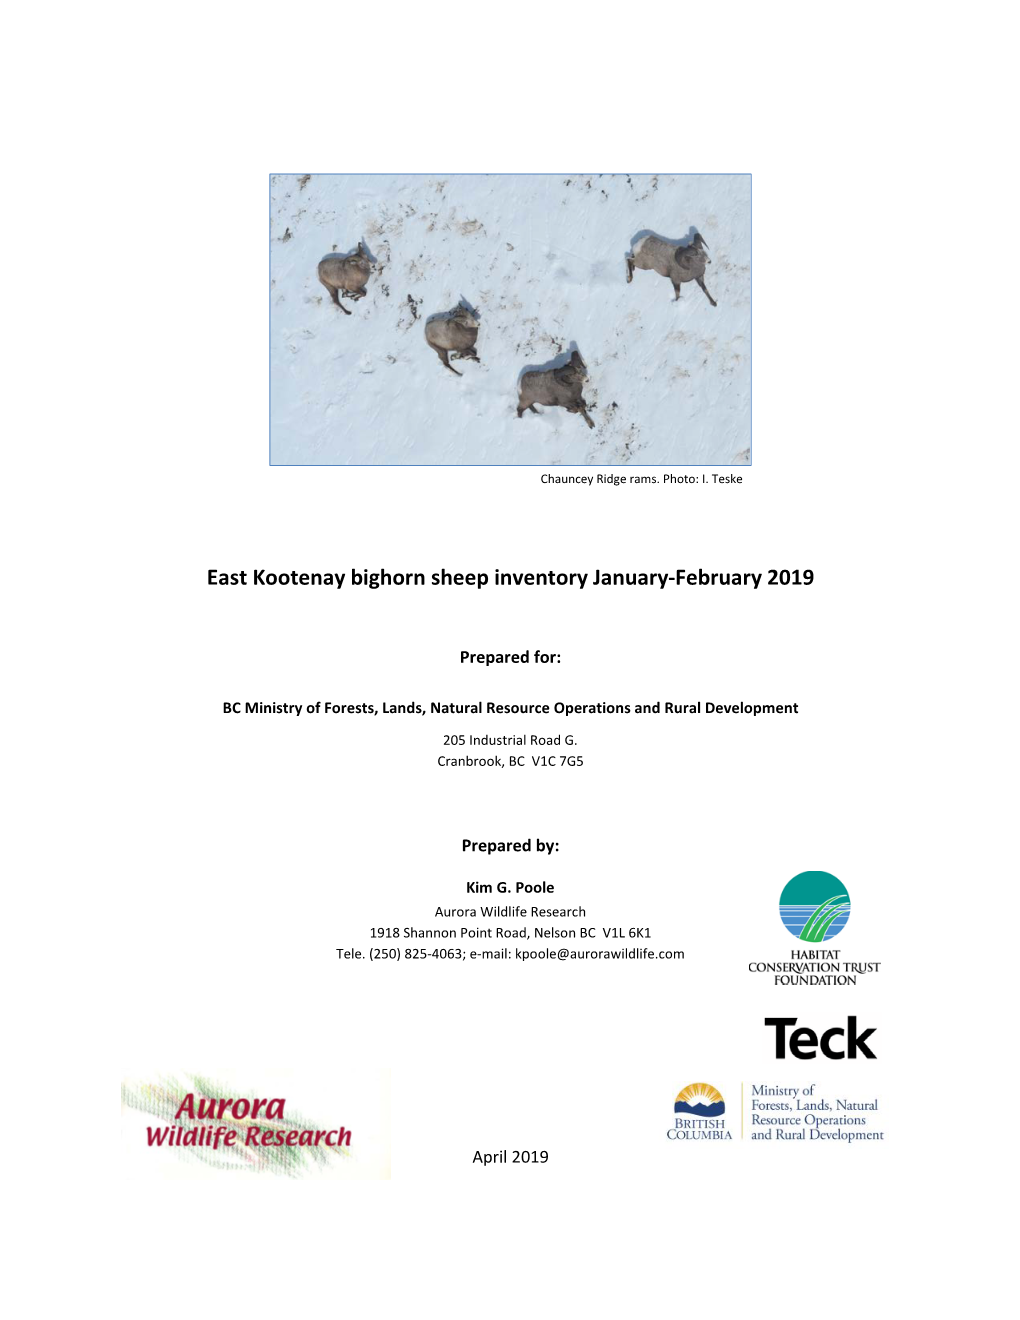 East Kootenay Bighorn Sheep Surveys 2019